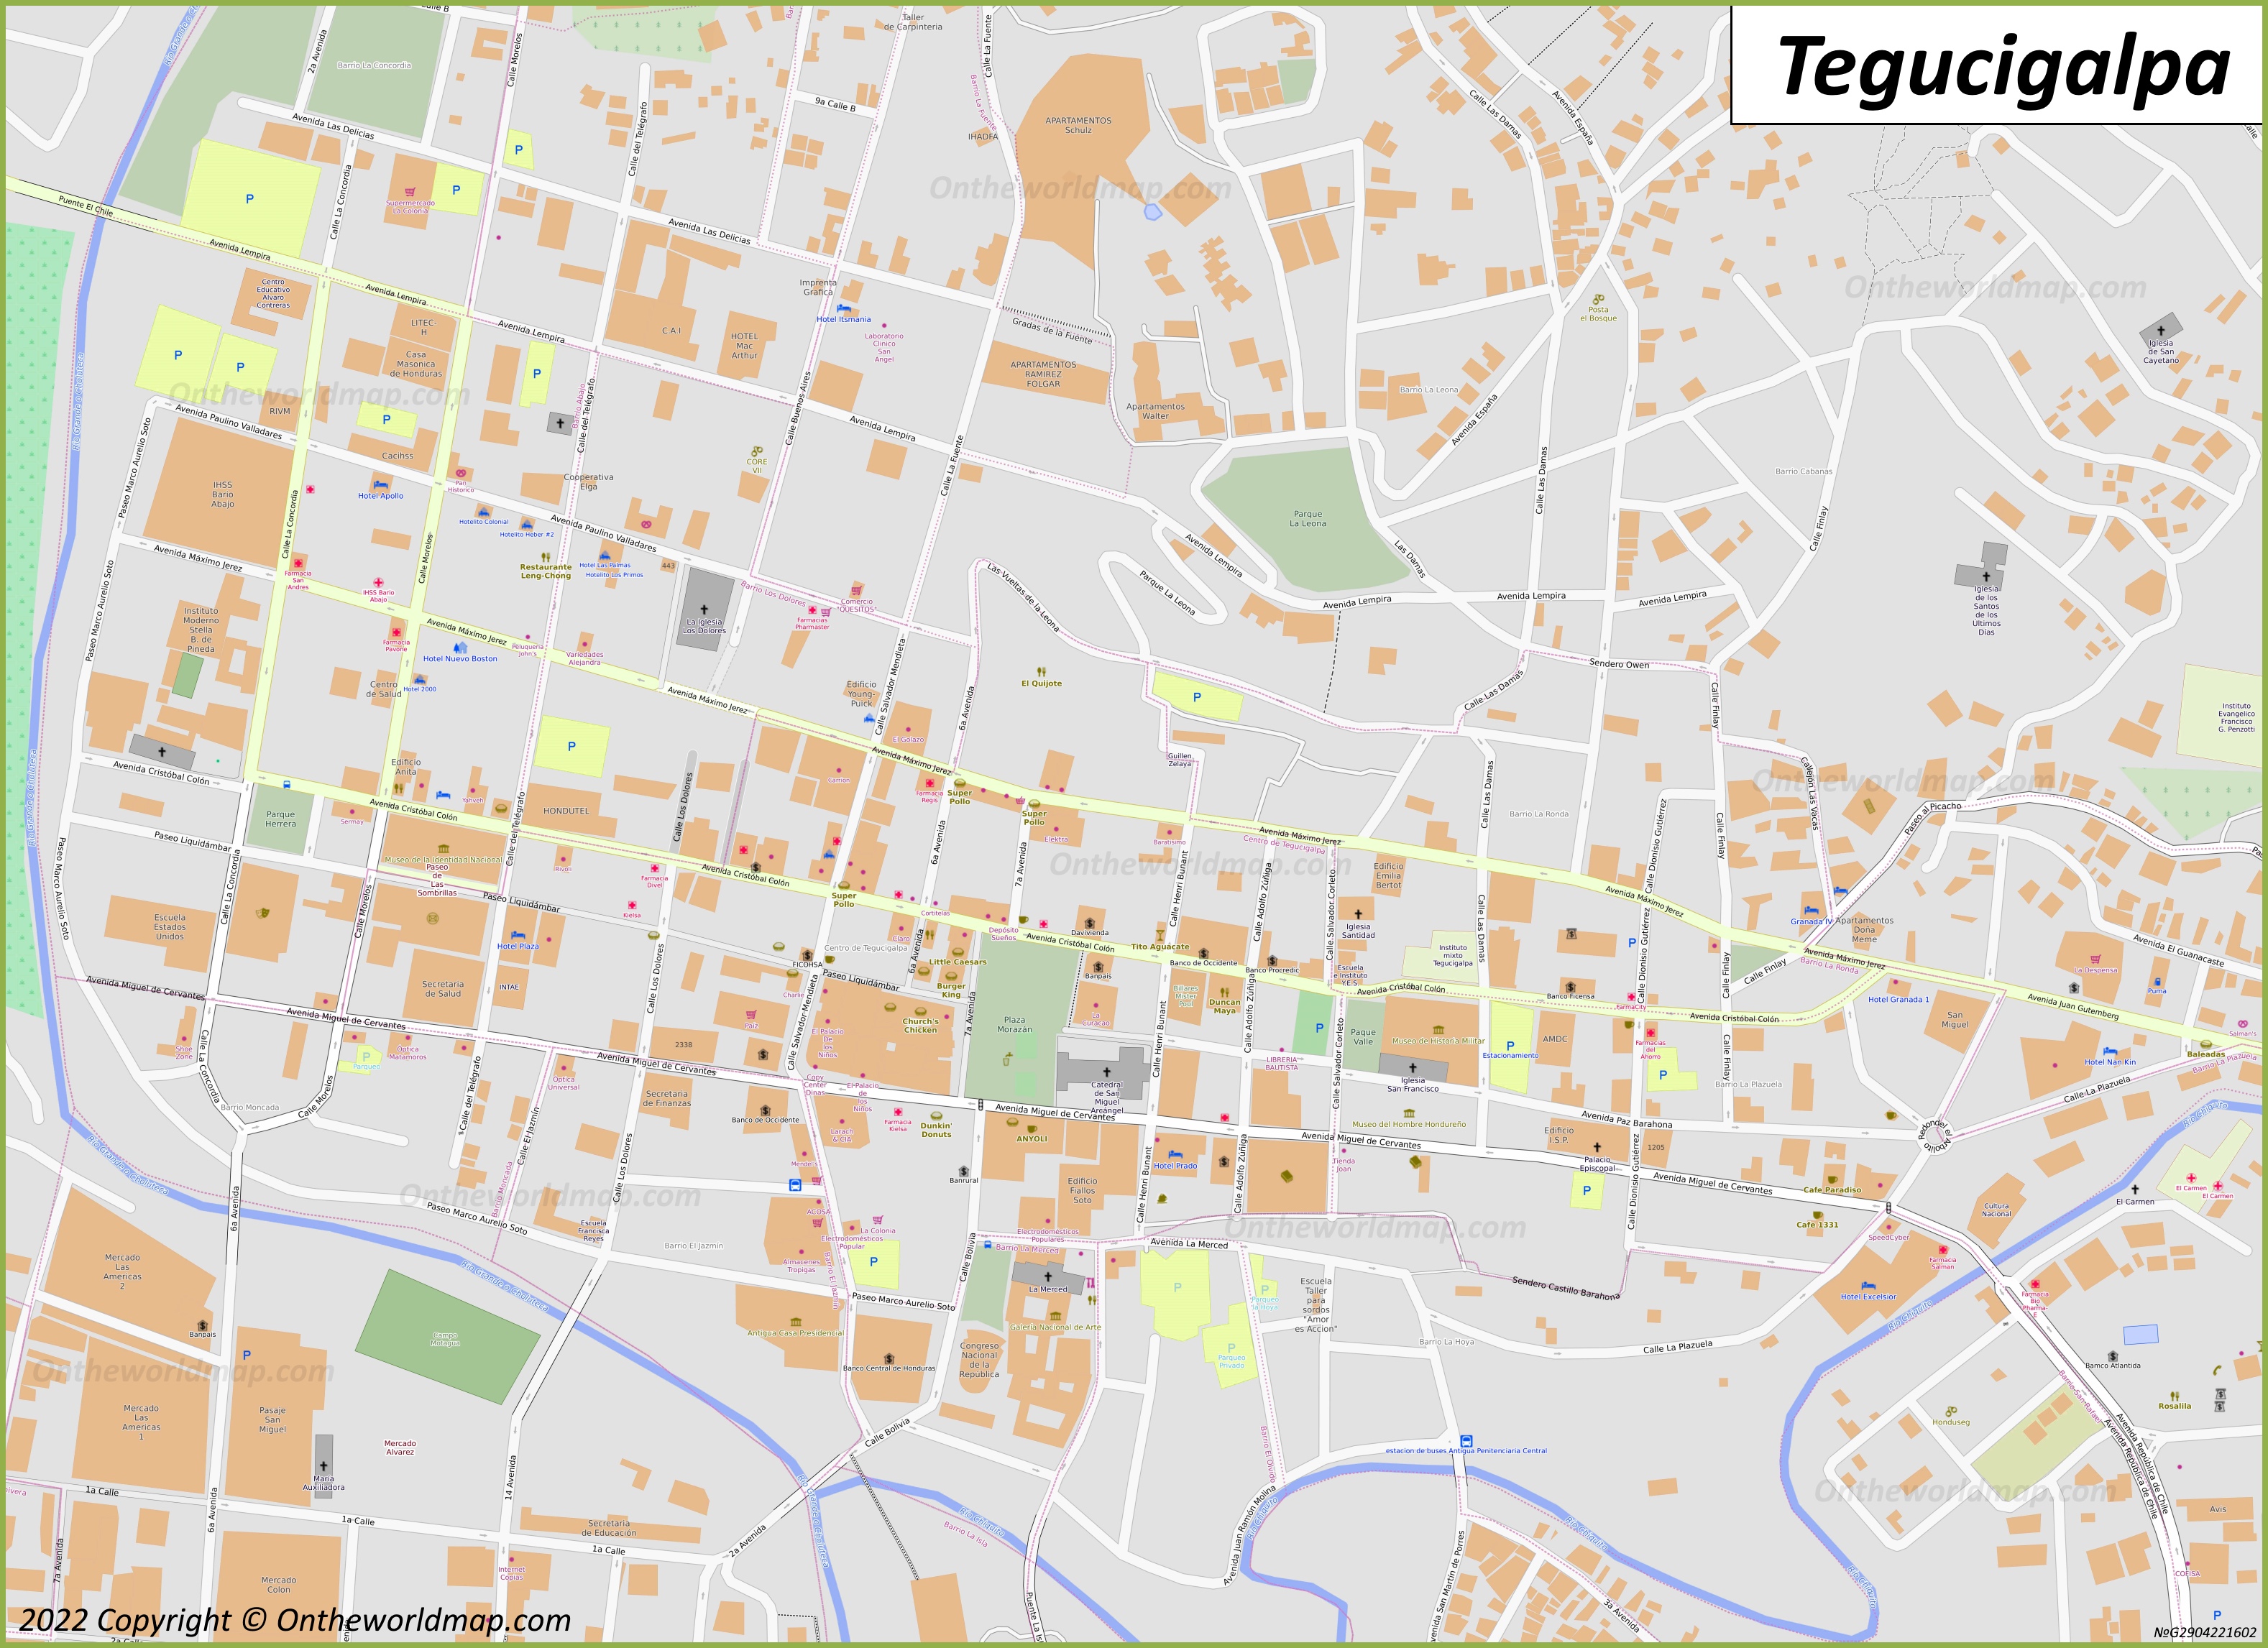 Tegucigalpa - Mapa del centro